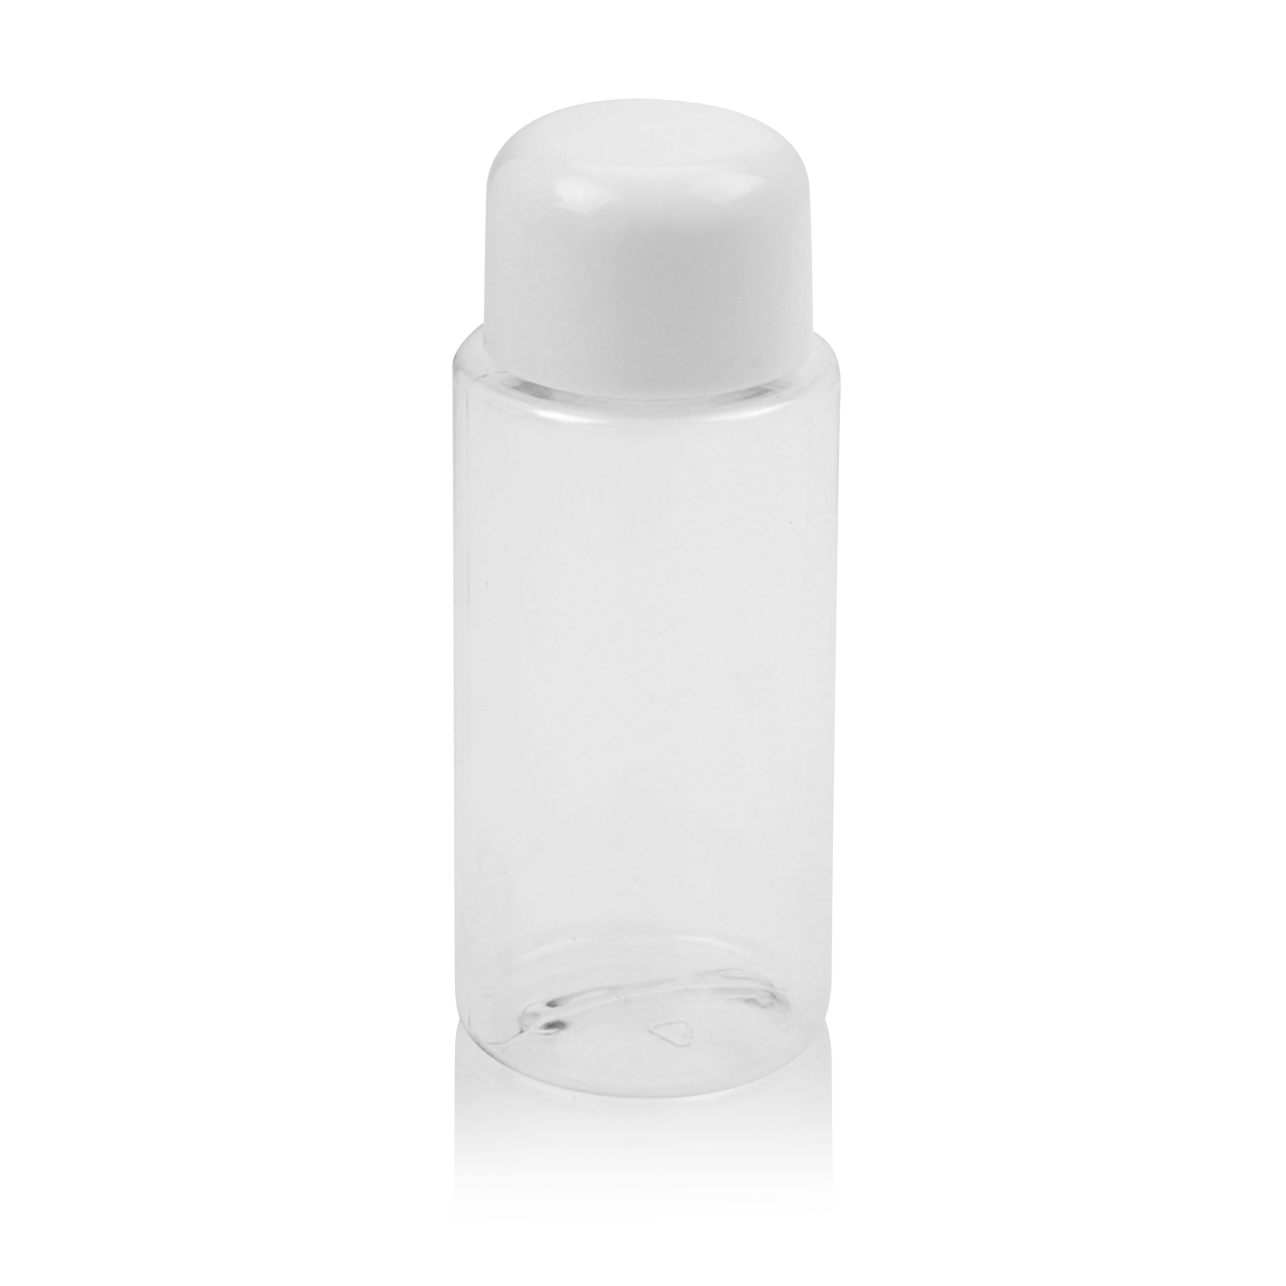 leerflasche-aus-kunststoff-fur-37-5-ml_30403